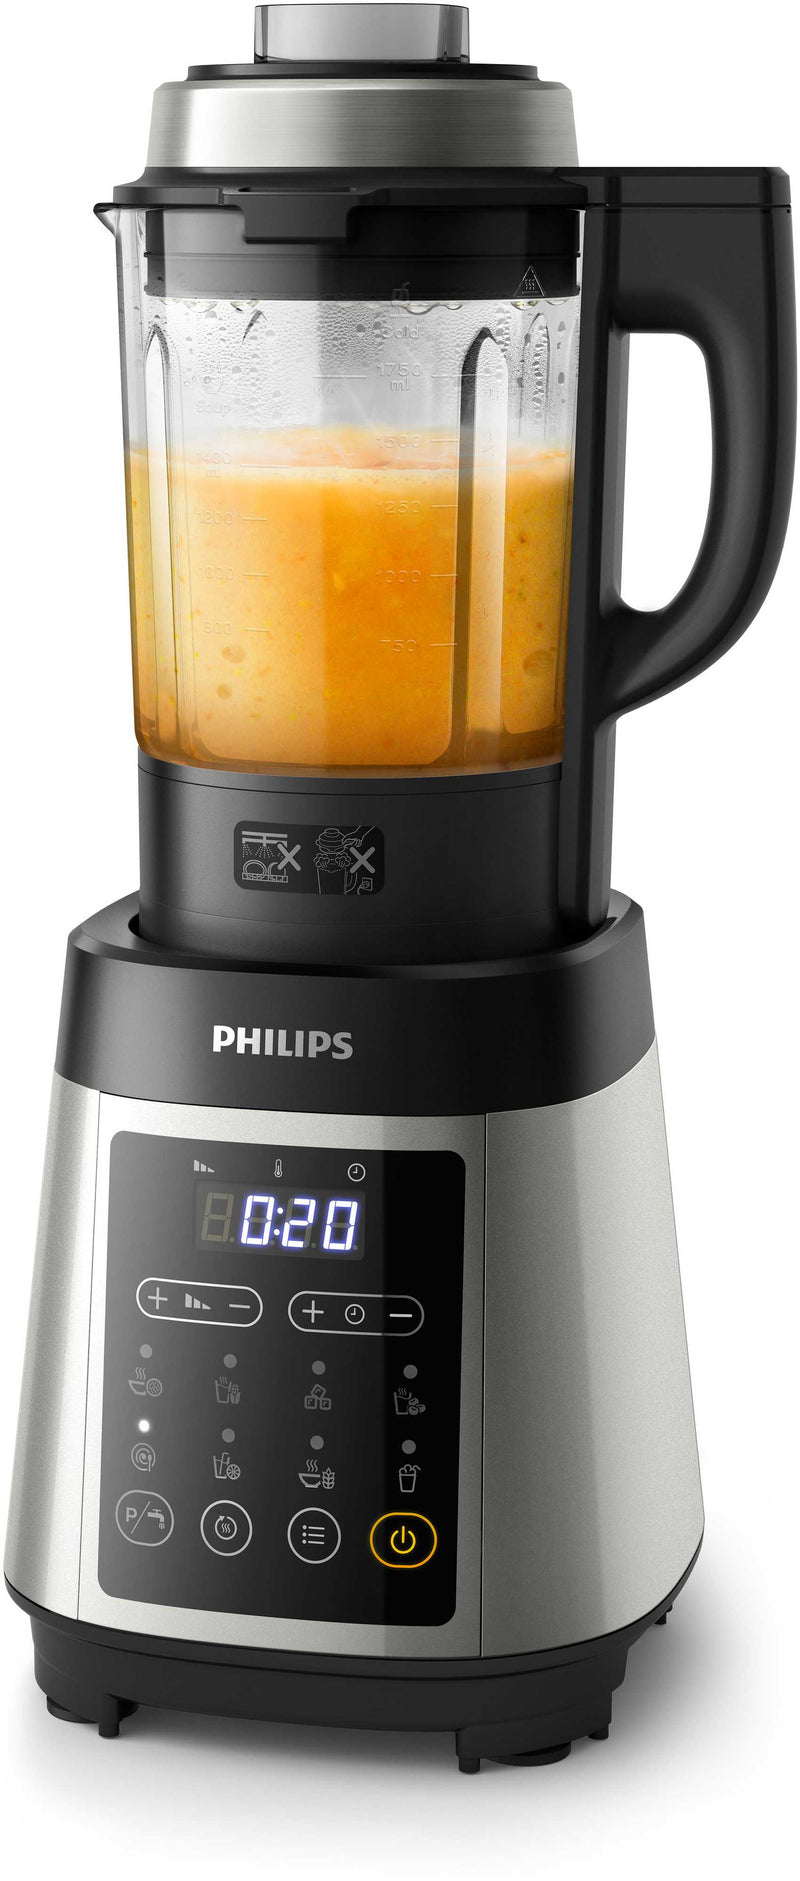 PHILIPS HR2088/91 High Speed Cooking Blender